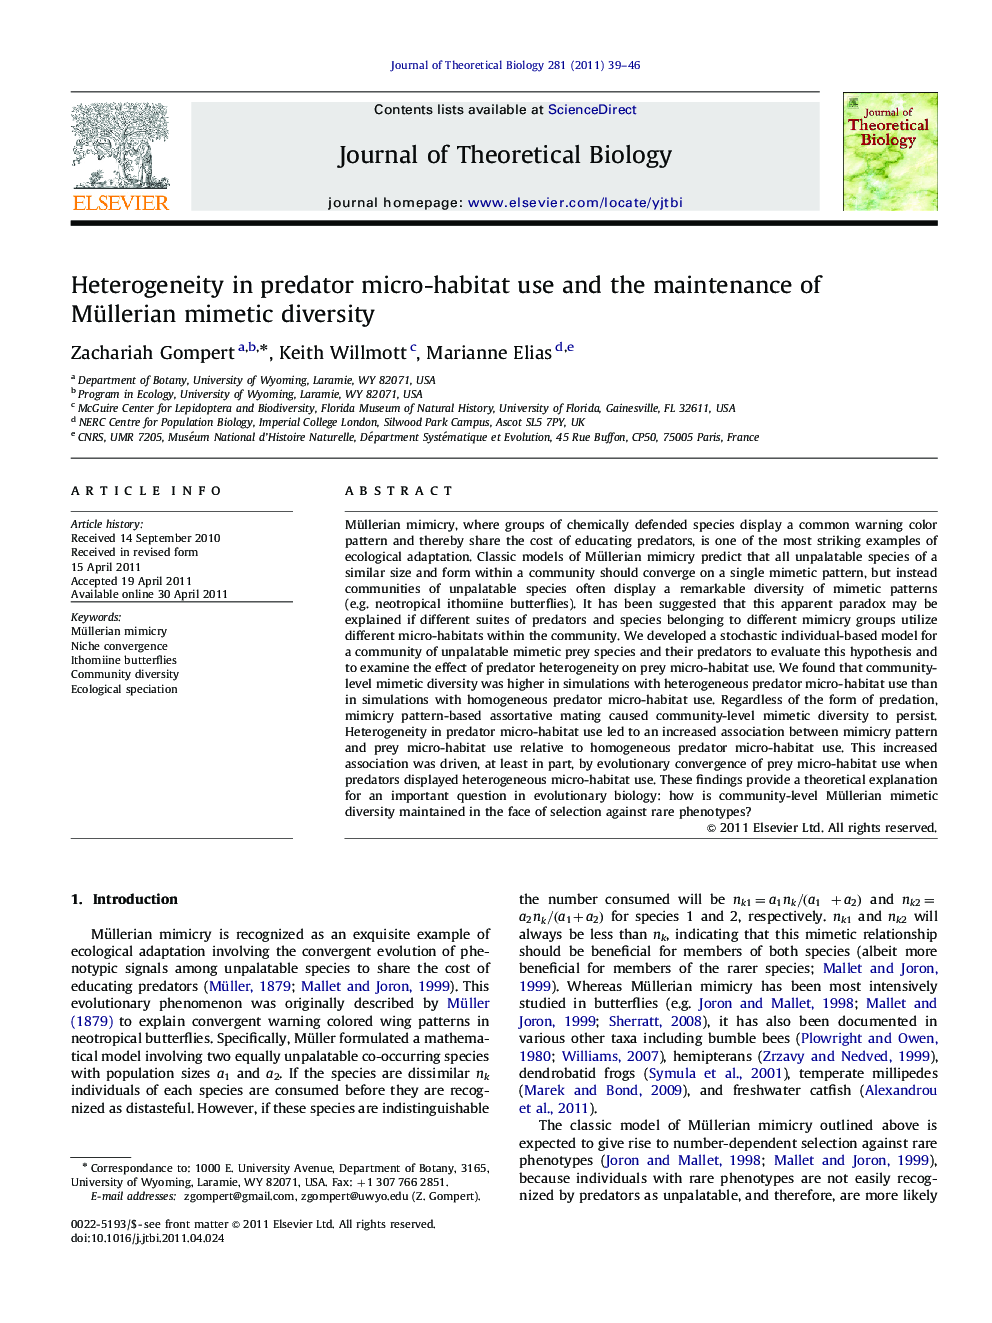 Heterogeneity in predator micro-habitat use and the maintenance of Müllerian mimetic diversity